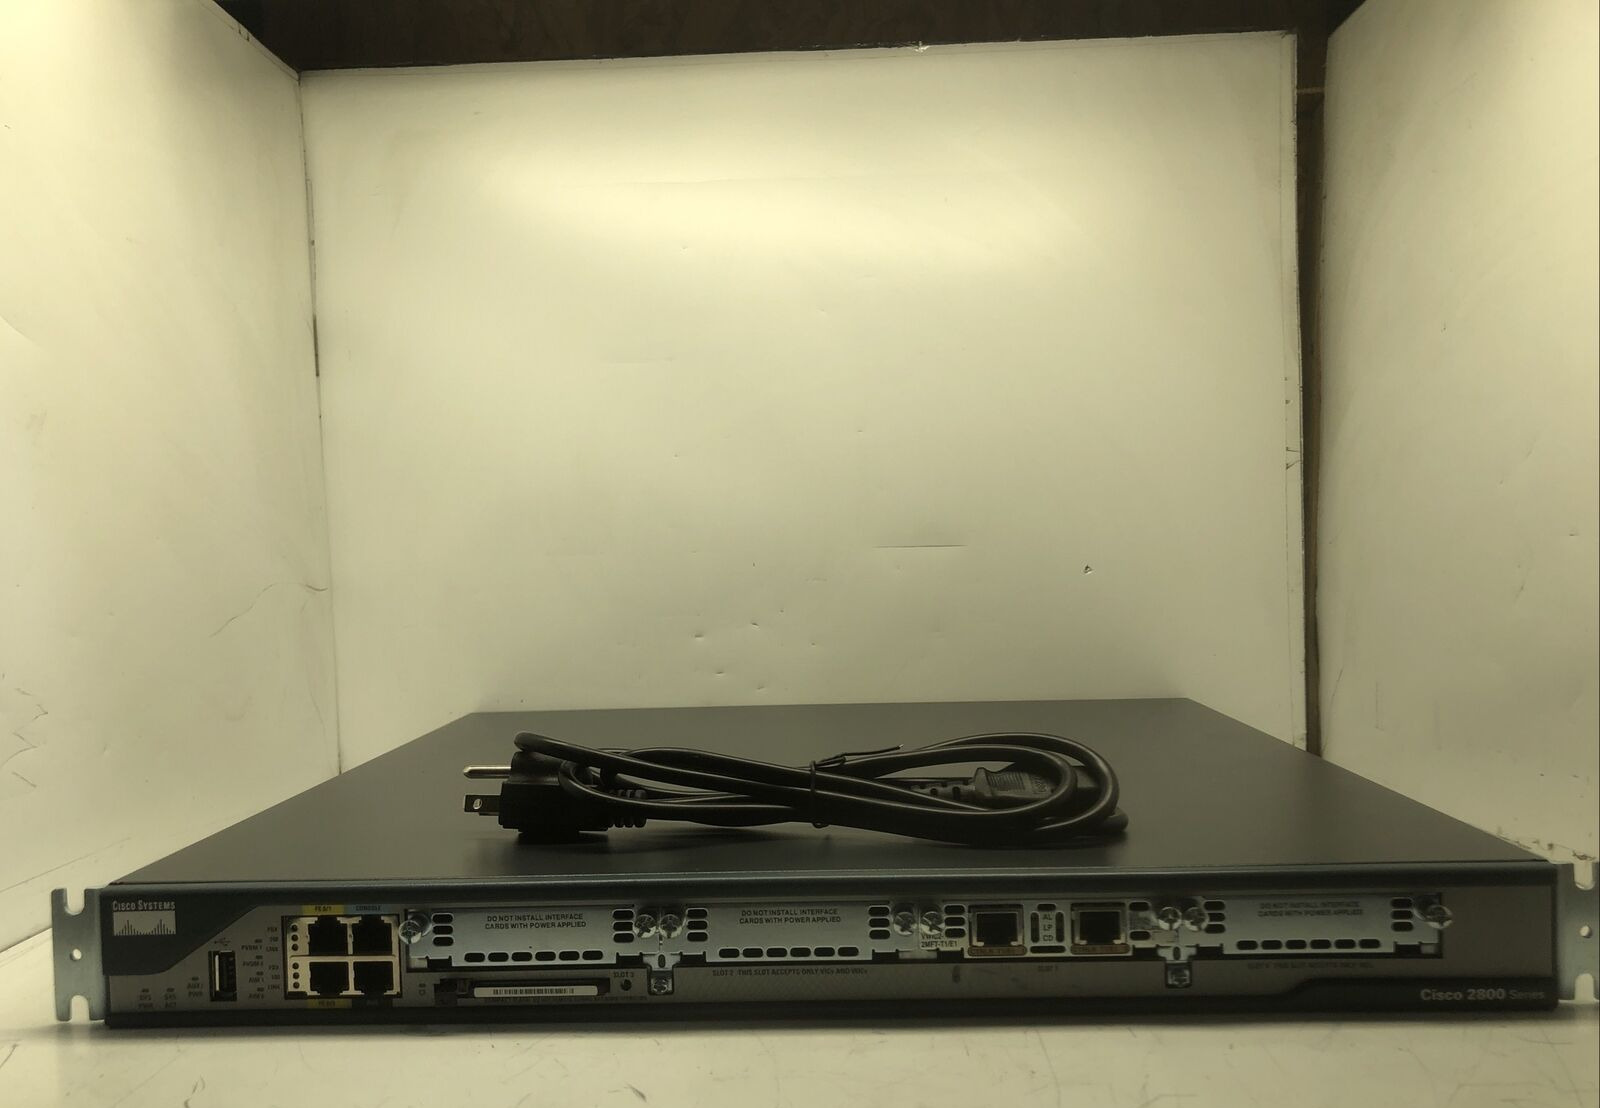 Cisco 2801 Integrated Services Router CISCO2801 V05 w/ Power Cord